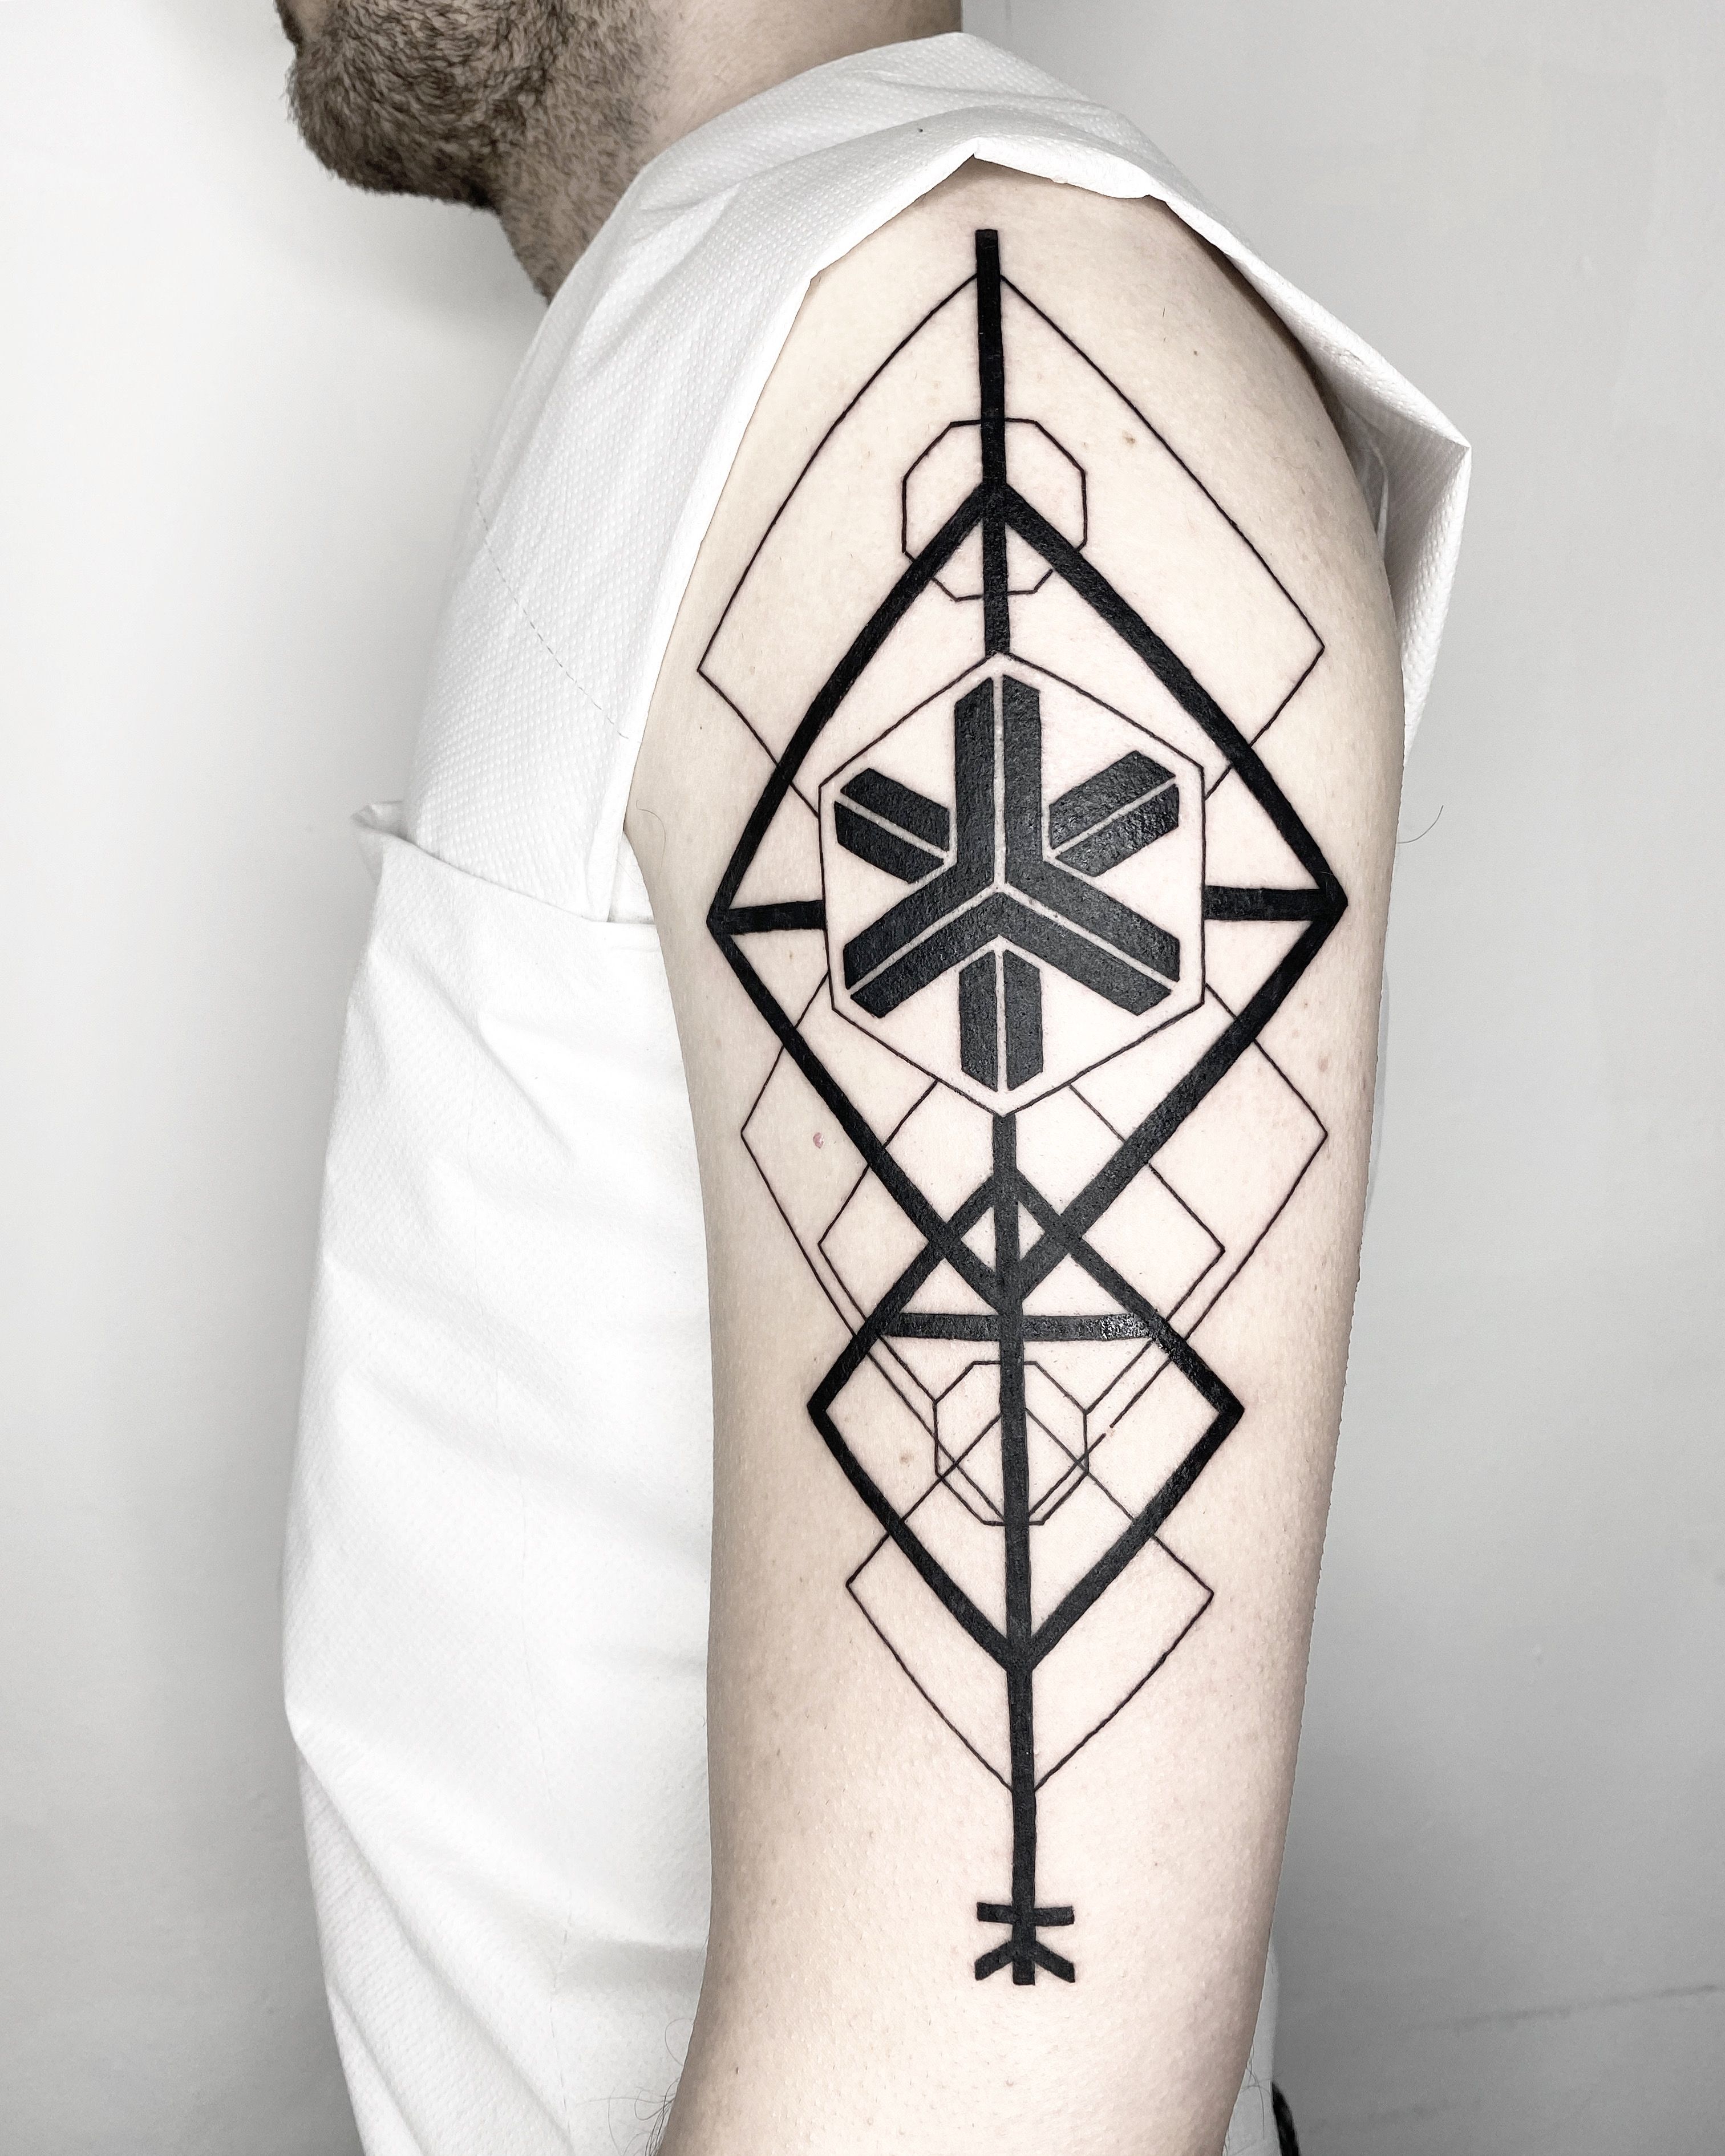 Geometric tattoo vector by Mergs45 on DeviantArt